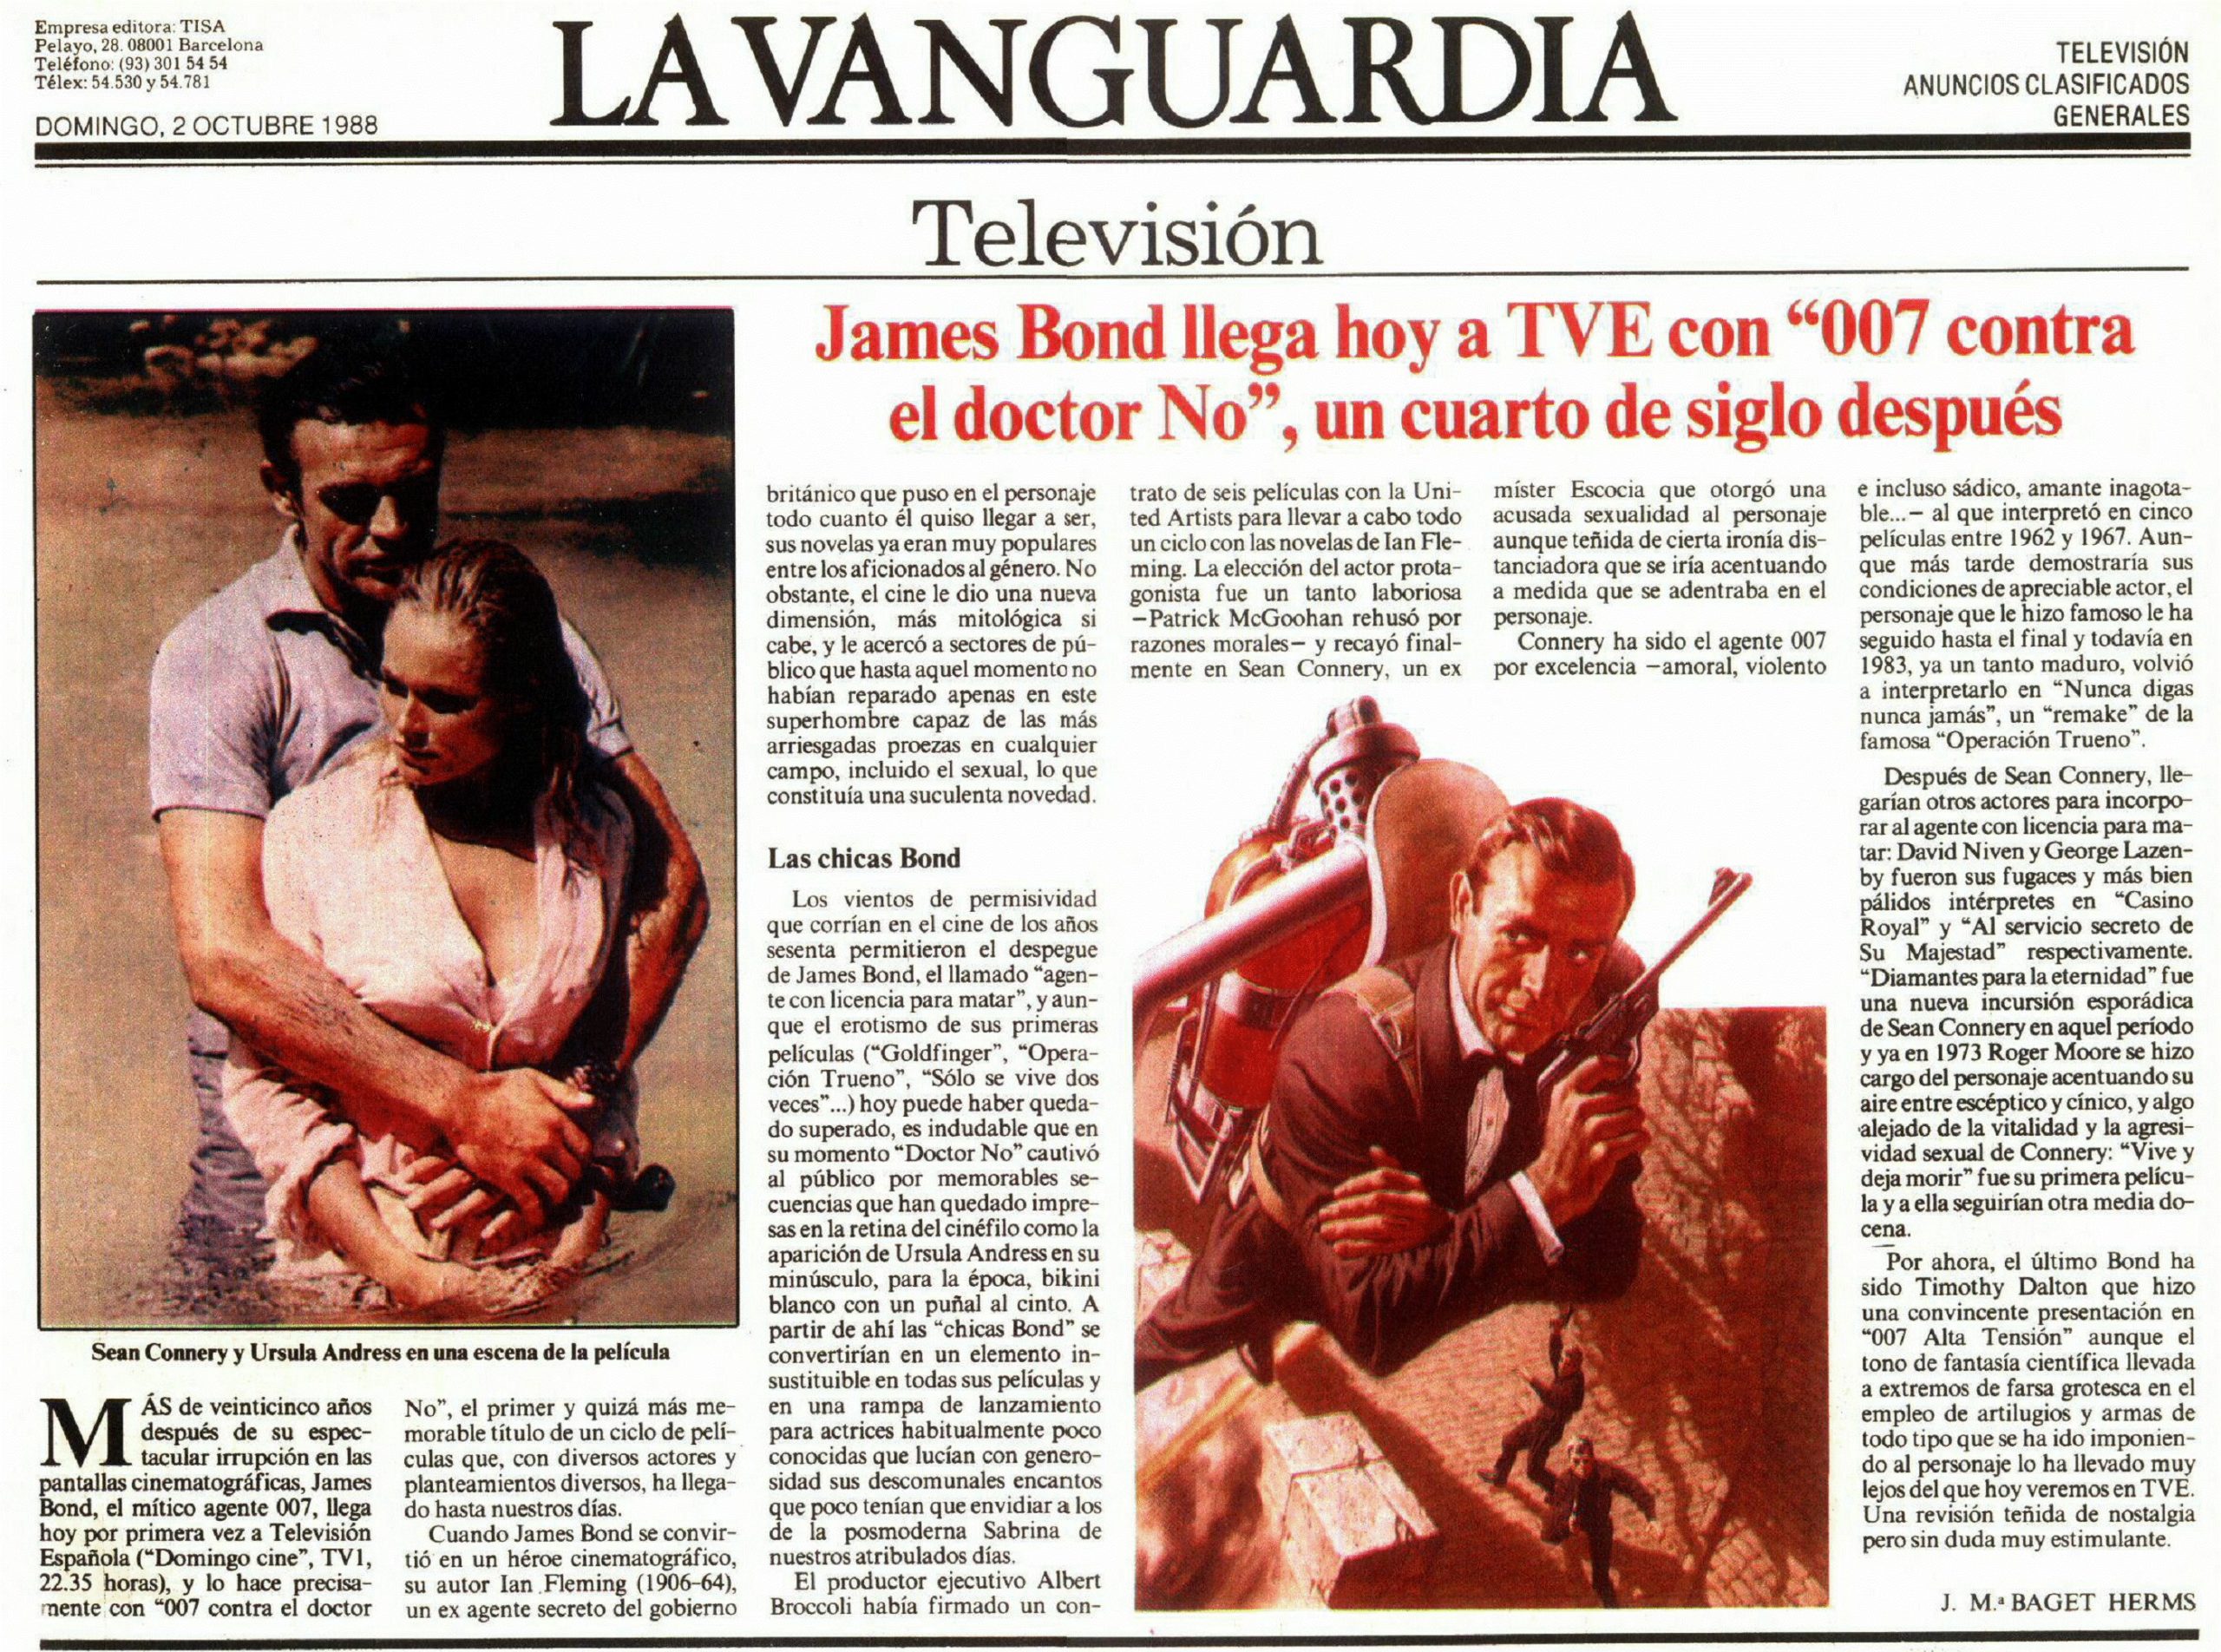 01-1988-10-02-La-Vanguardia-Barcelona-045-Clasificados-TVE1-scaled.jpg